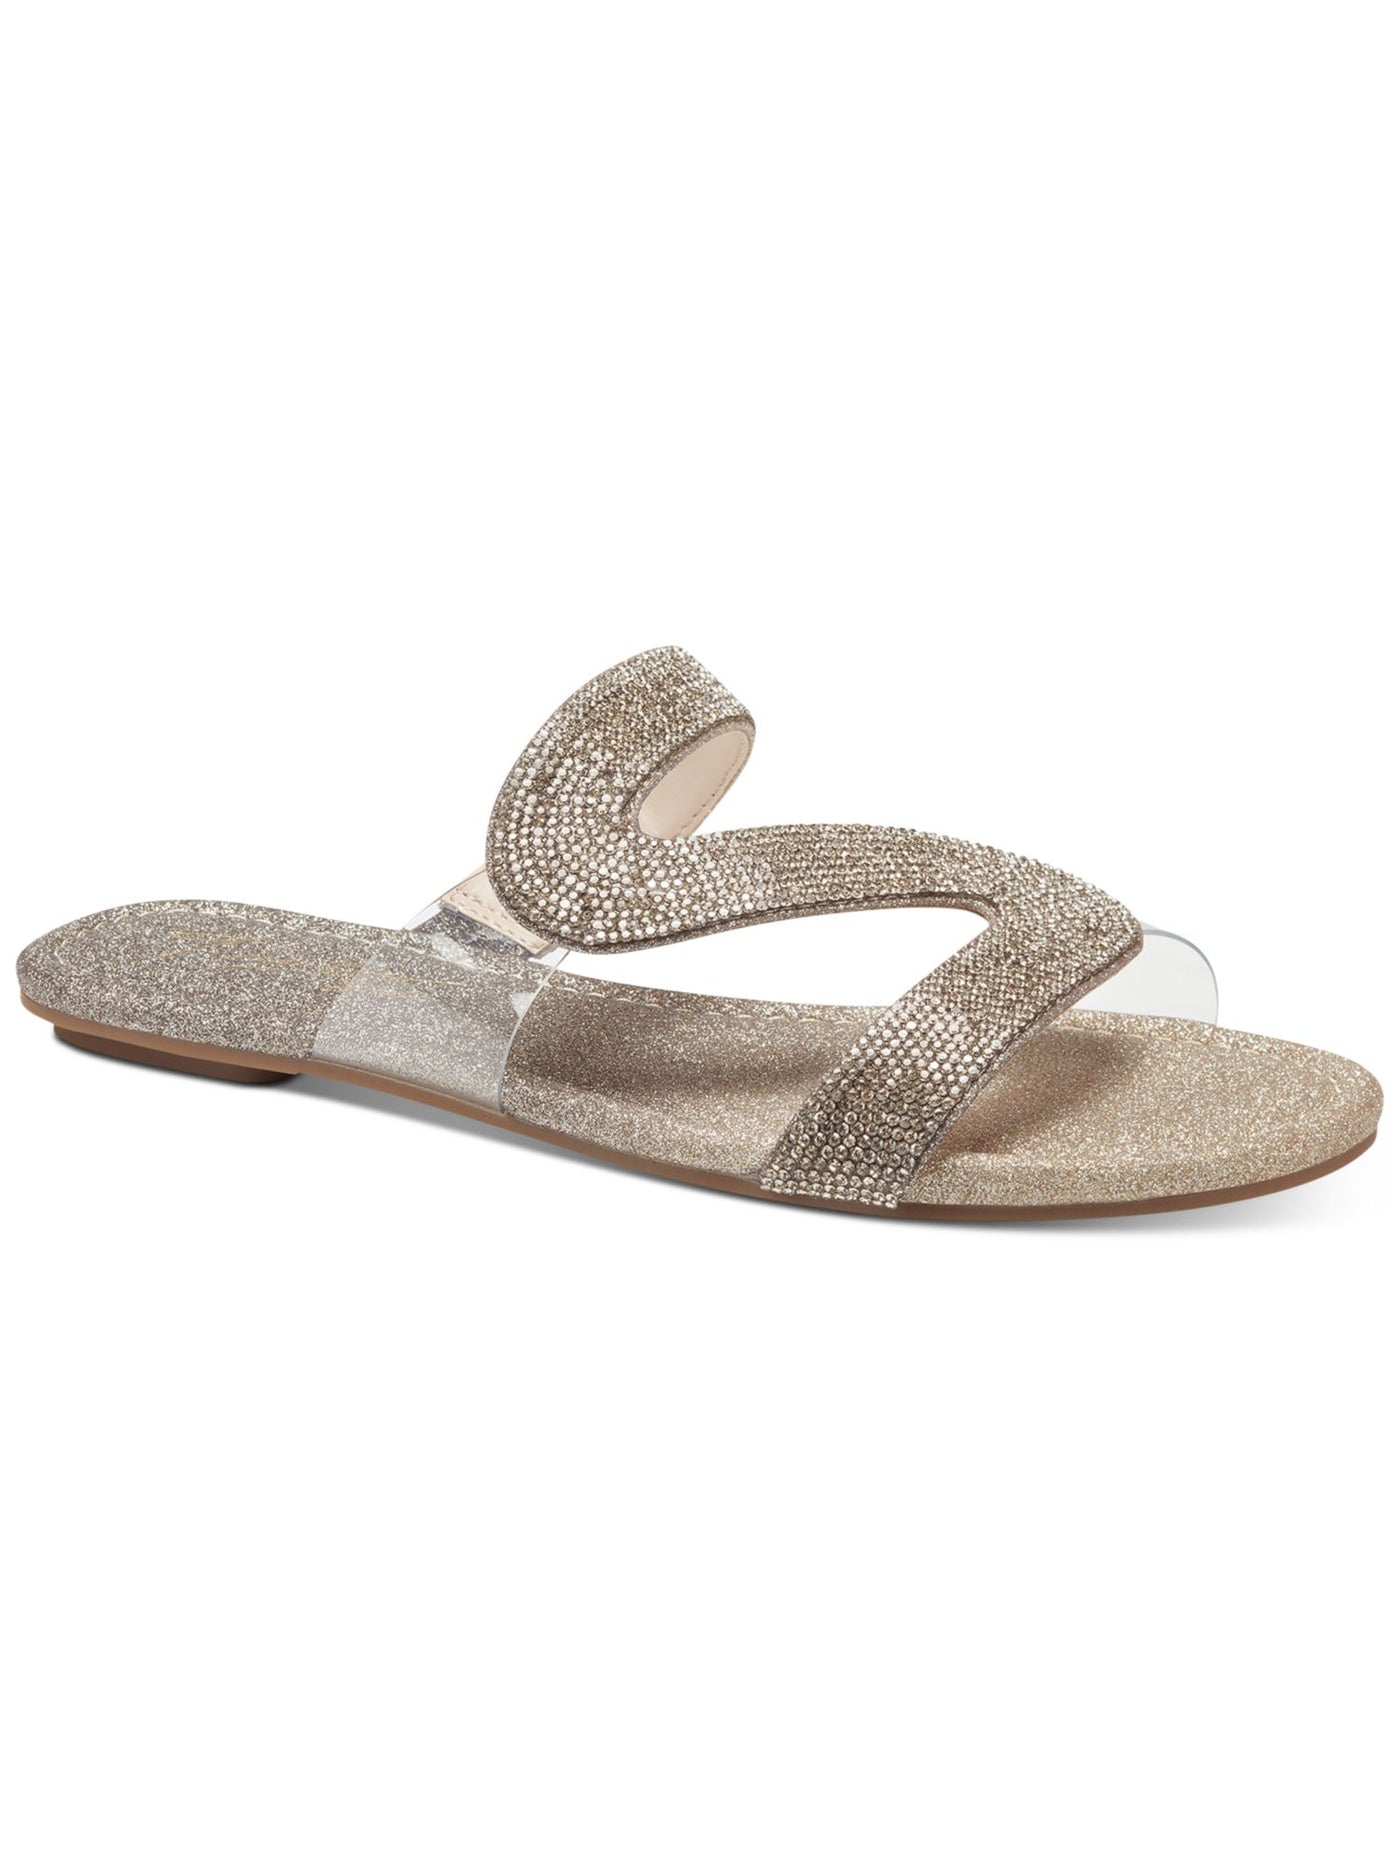 THALIA SODI Womens Gold Rhinestone Asymmetrical Bianca Round Toe Slip On Sandals Shoes 10 M